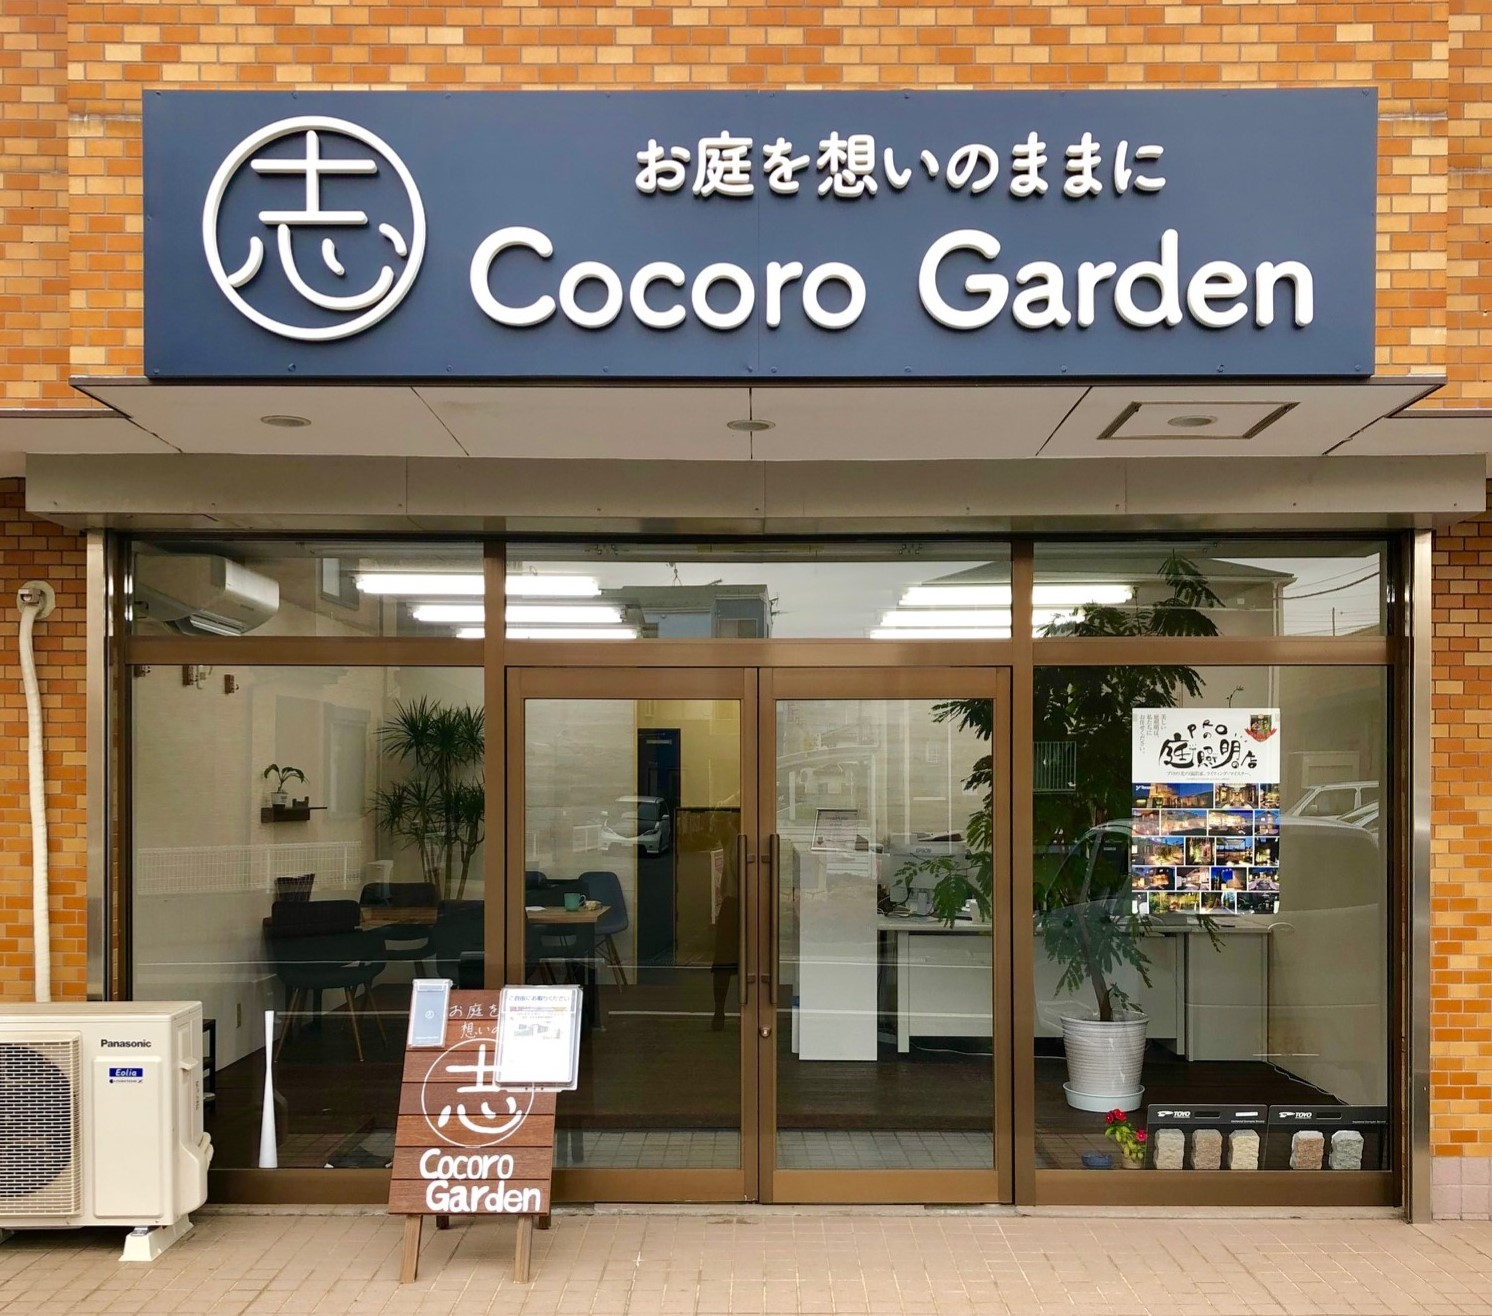 Cocoro Garden ^ VƁij